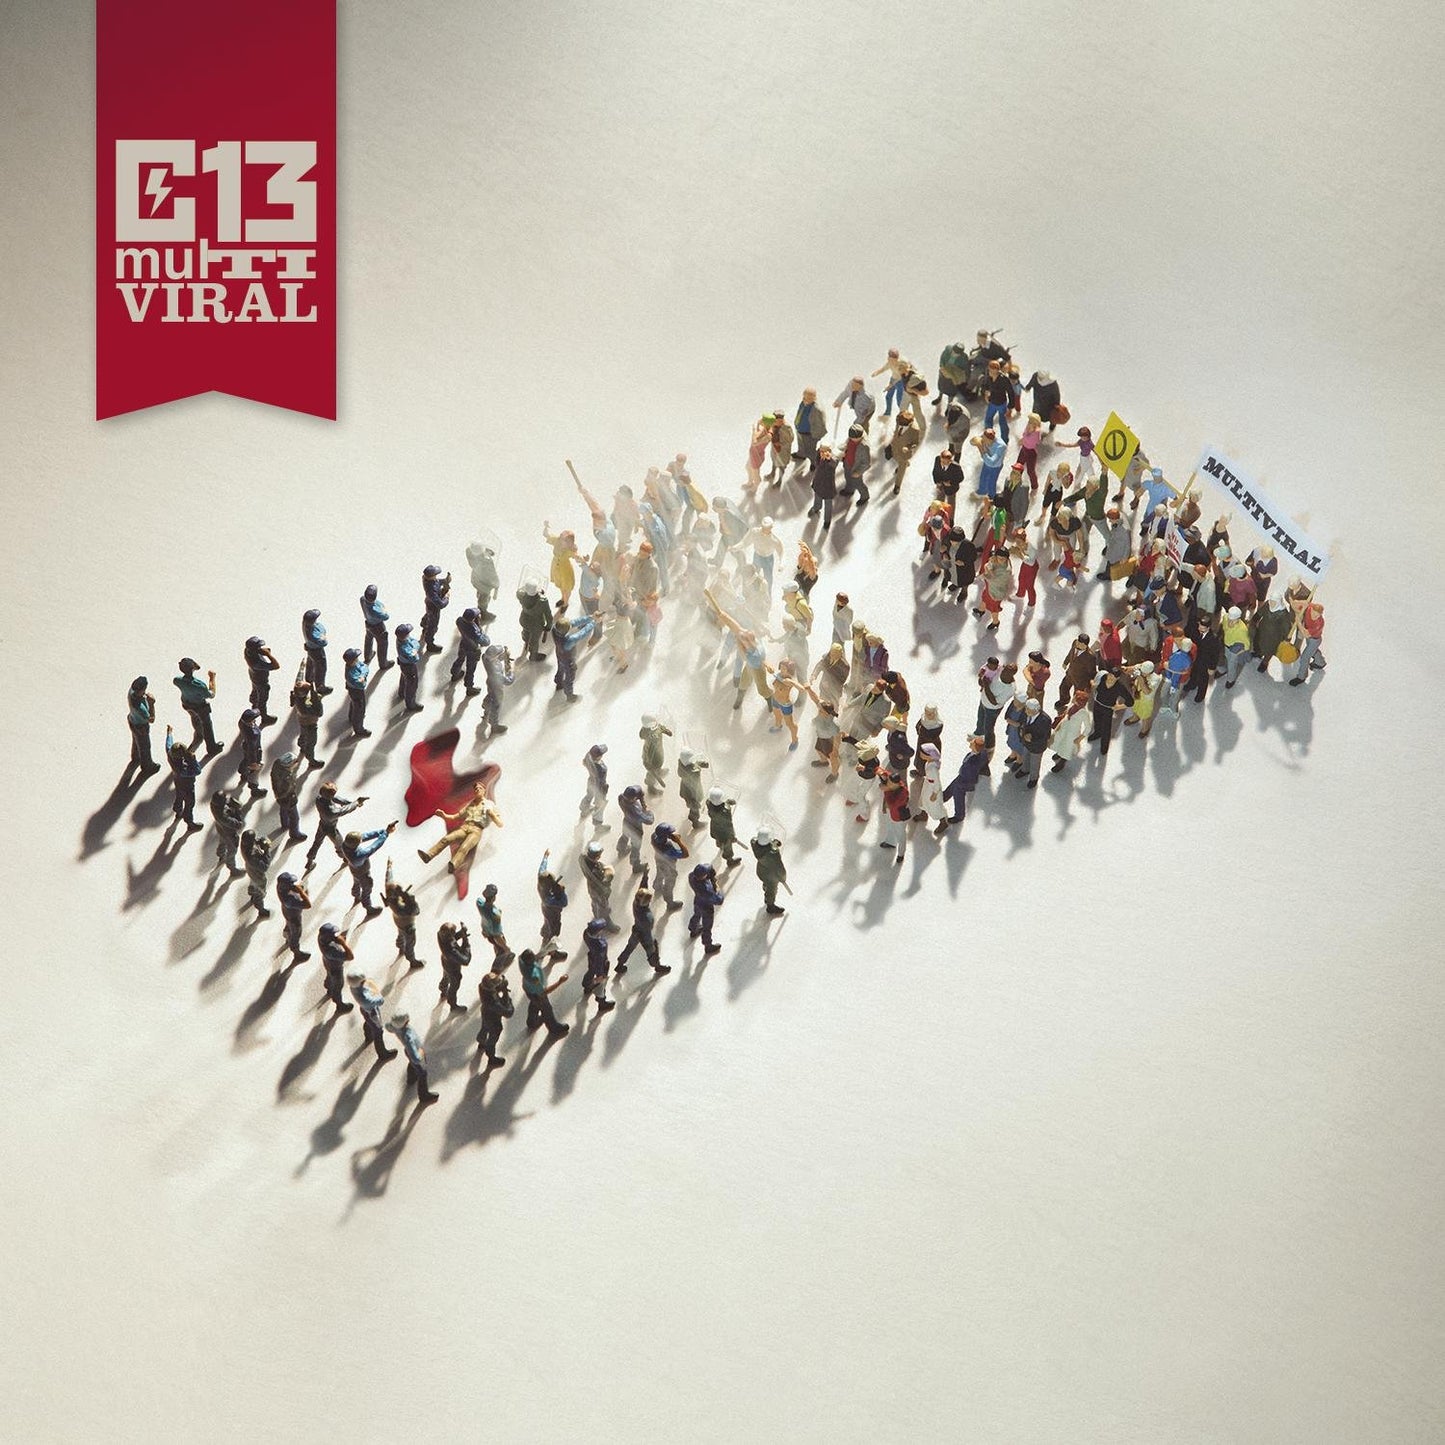 Calle 13 / Multi Viral